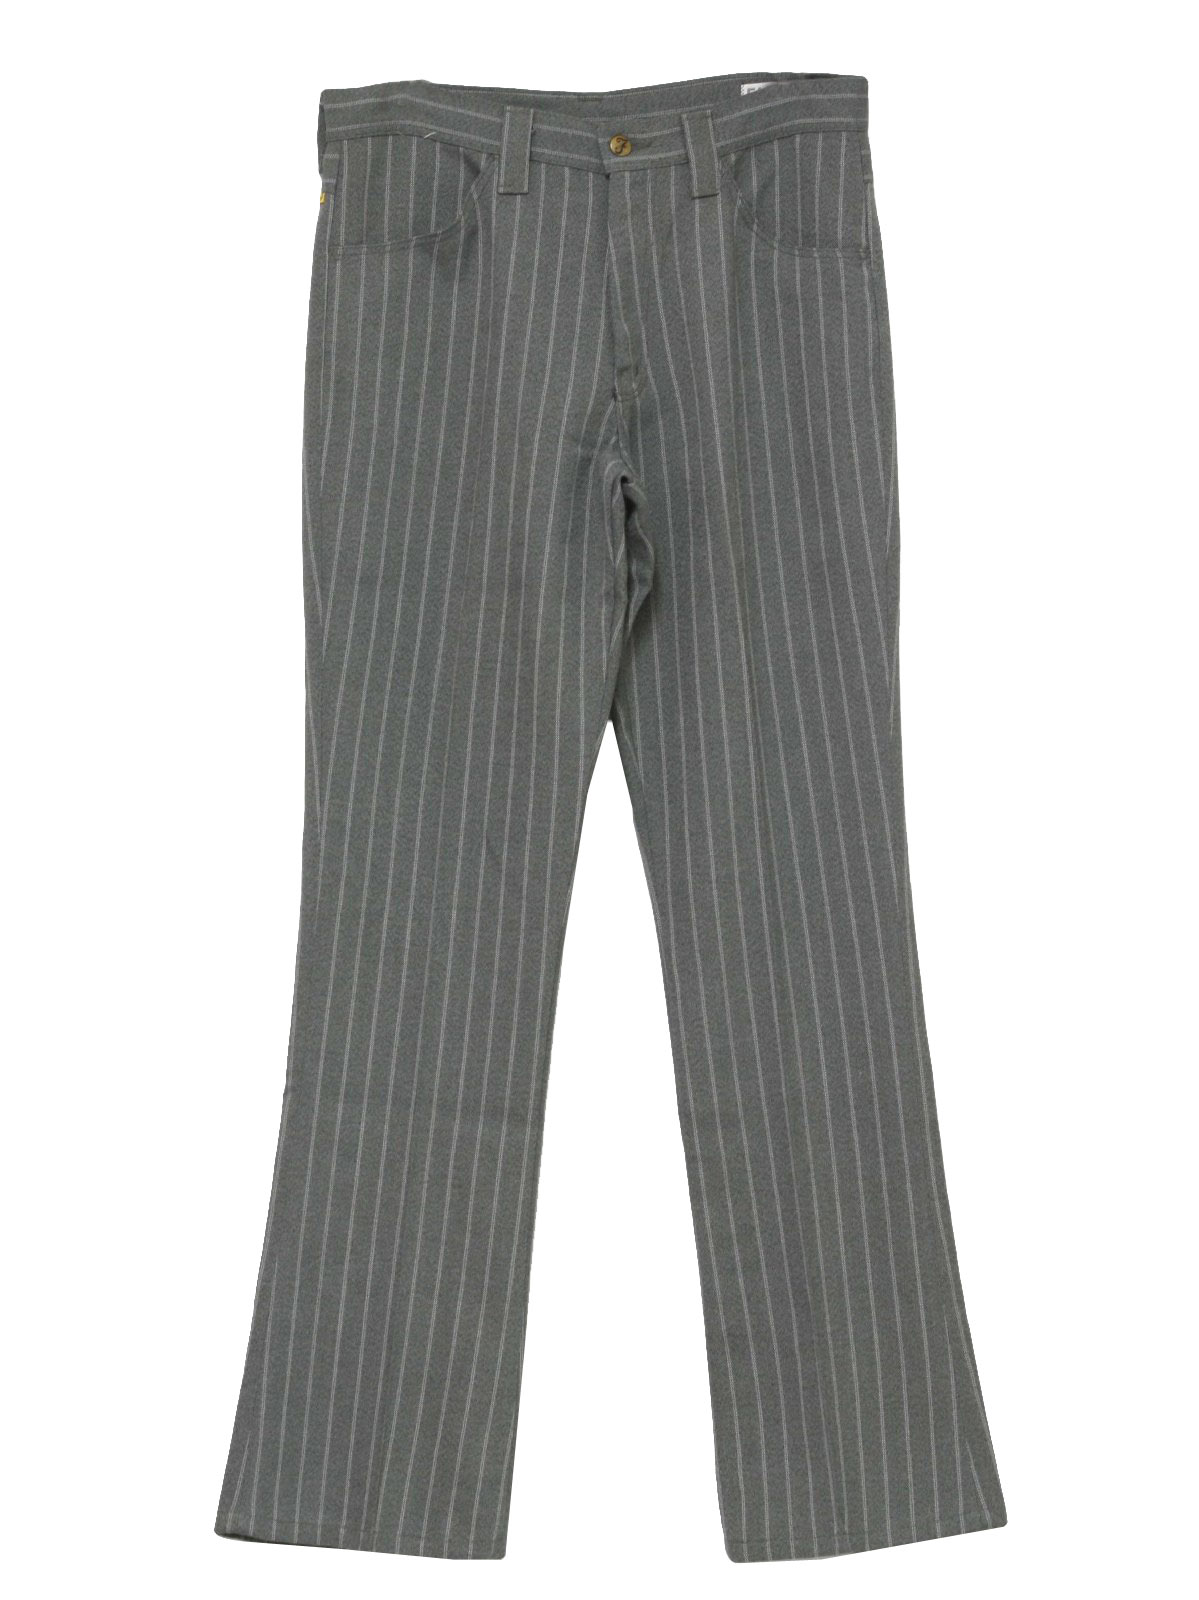 Retro 1960's Pants (Farah) : Late 60s -Farah- Mens smoke grey and off ...